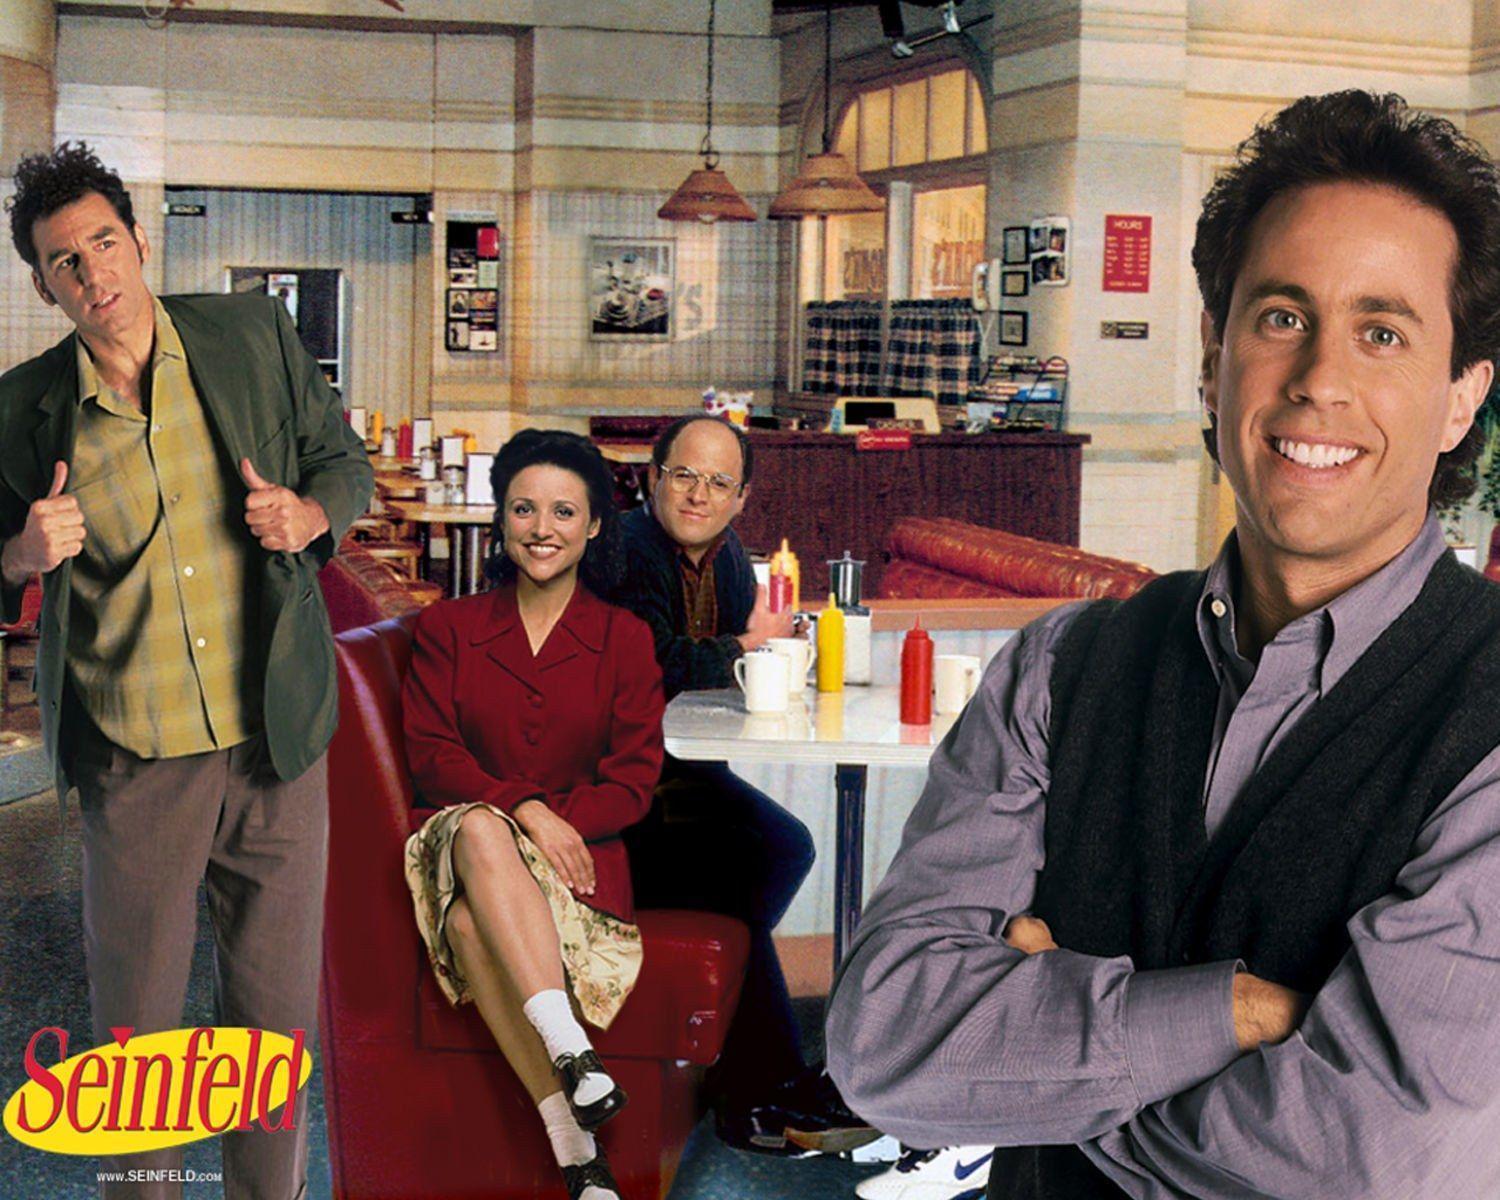 Seinfeld Coming to Hulu: 11 Best Seinfeld GIFs (PHOTOS)